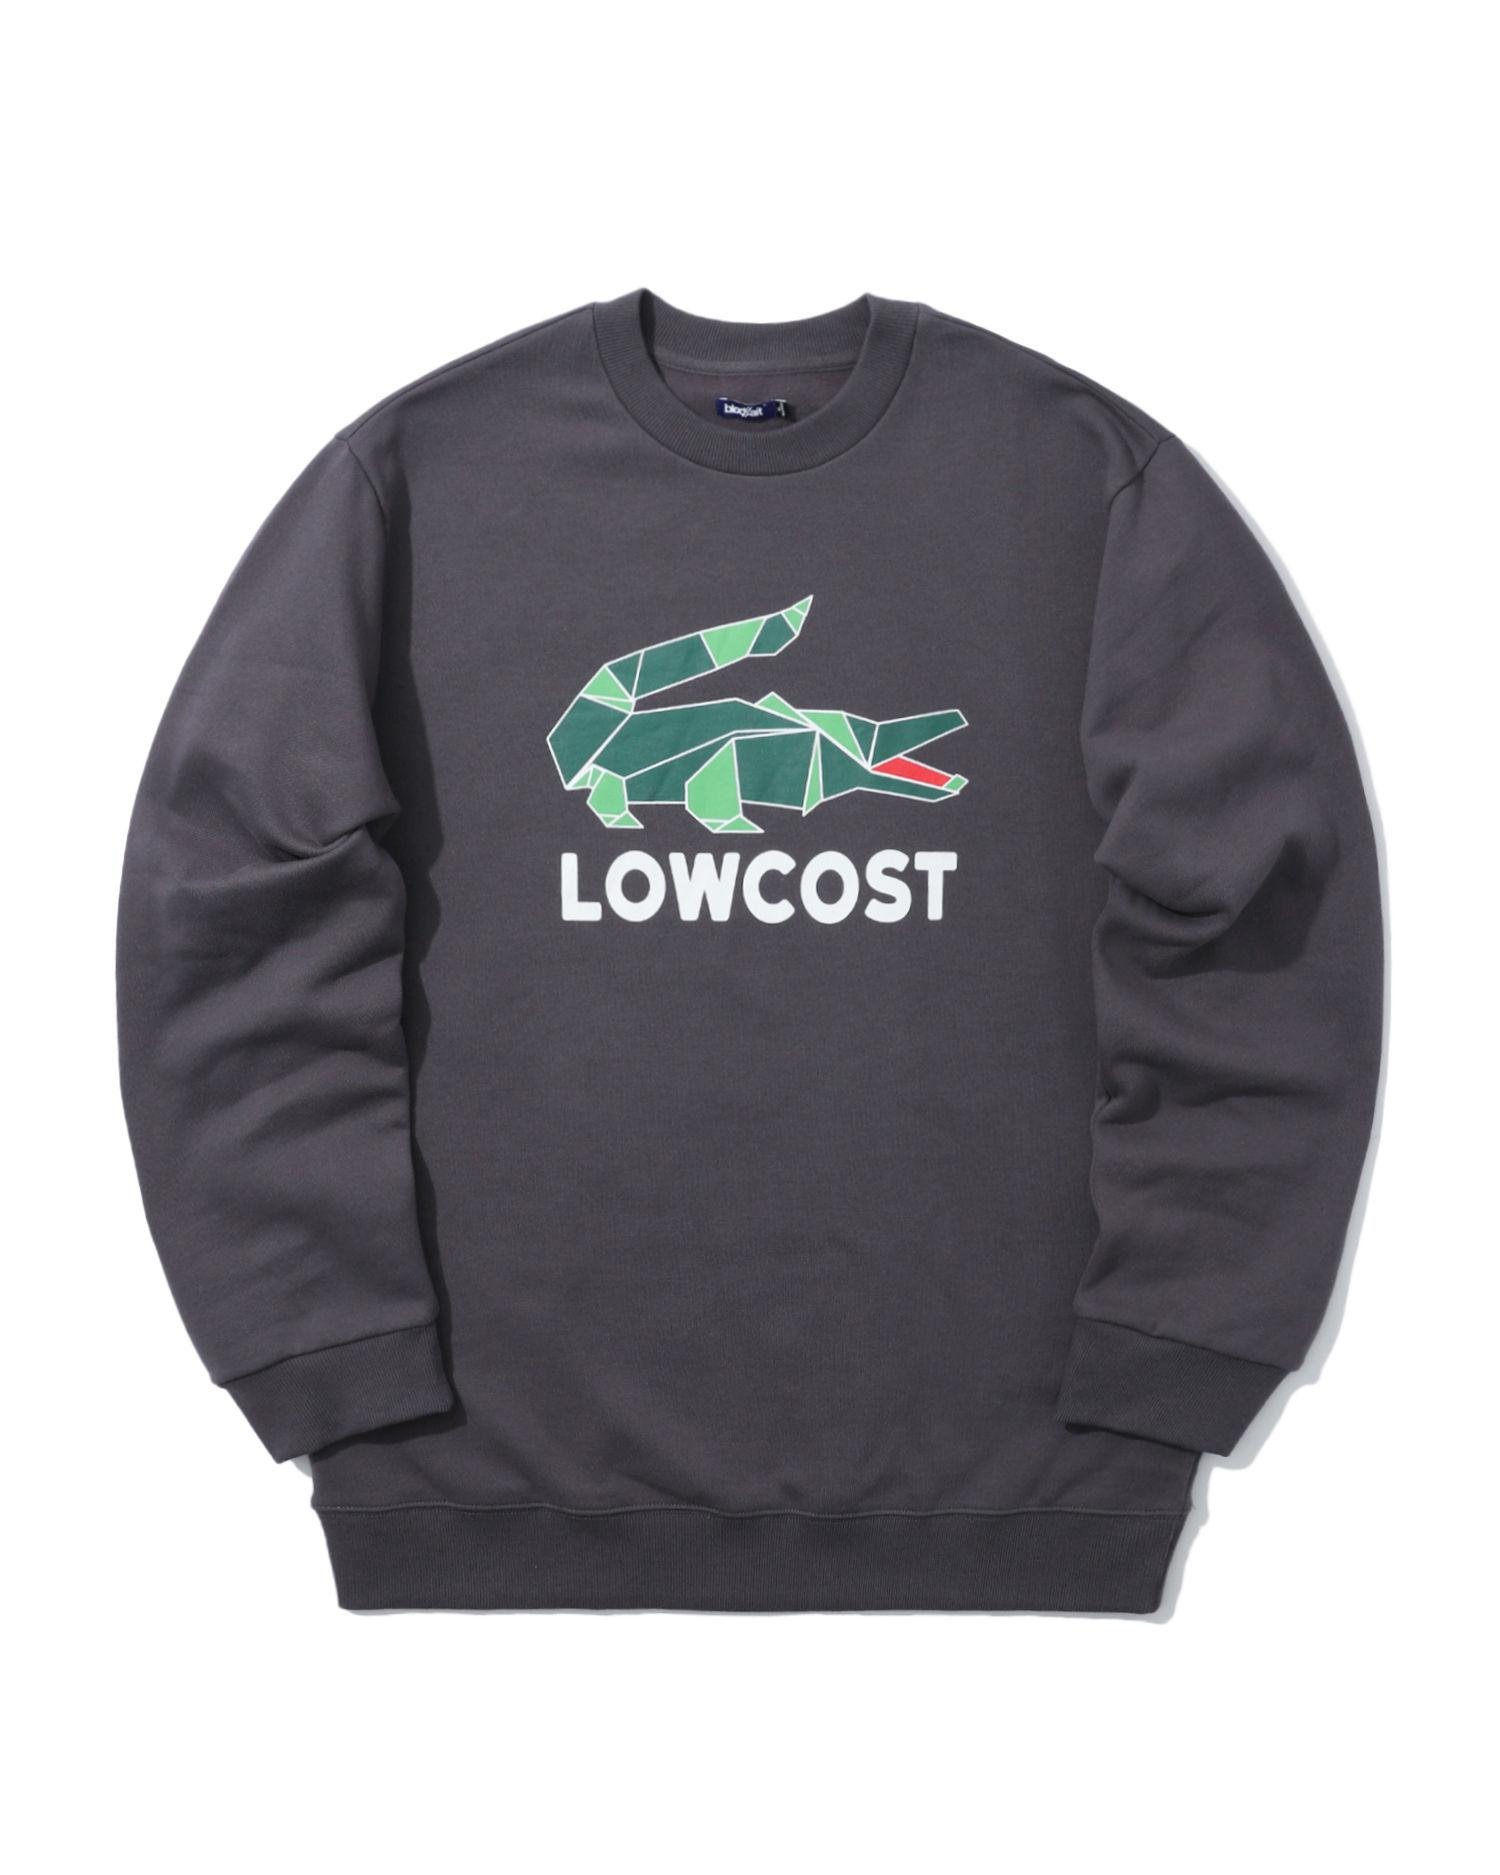 Lowcost print sweatshirt by BLOCKAIT